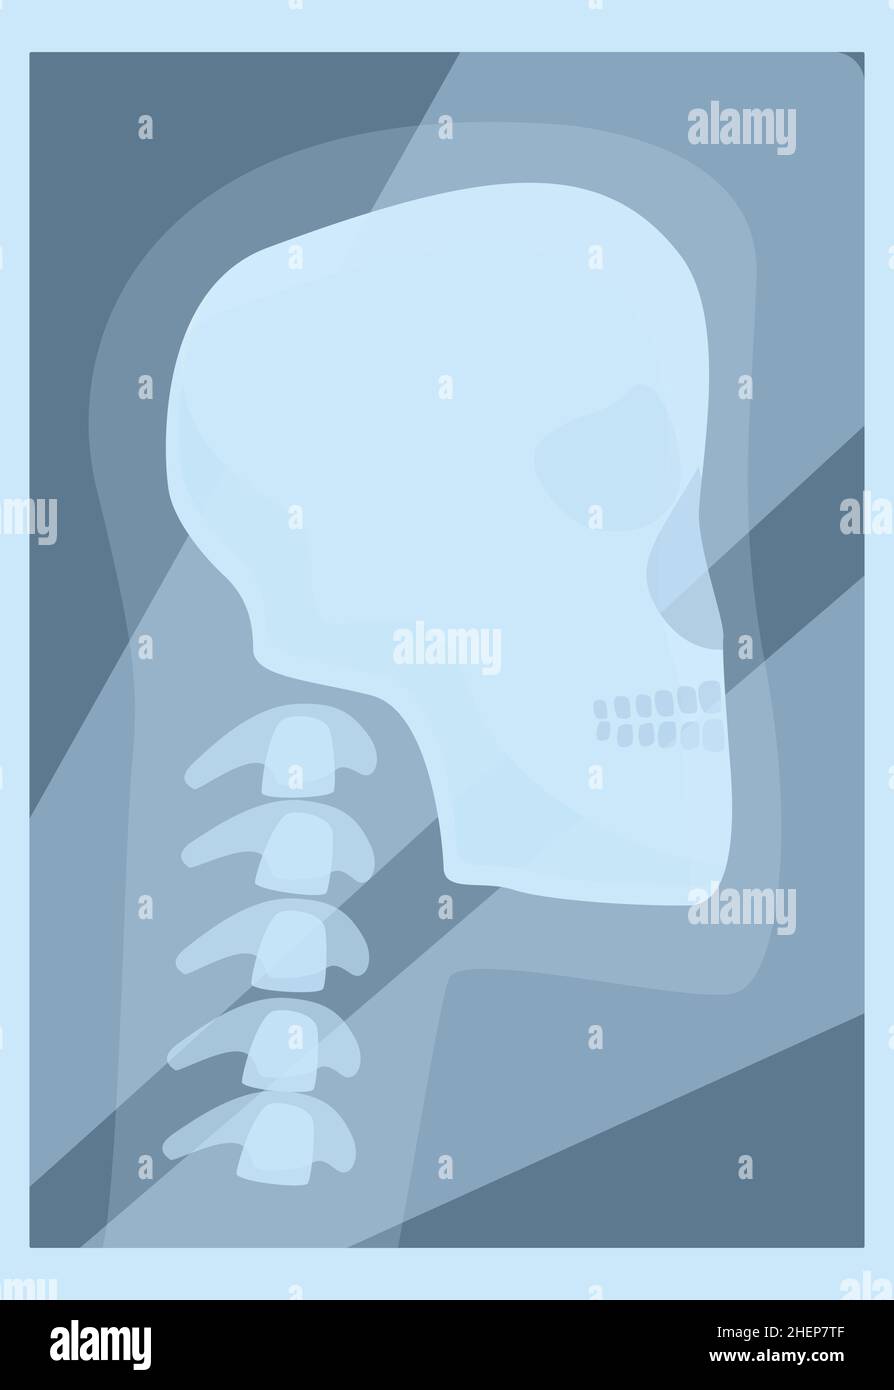 Xray shoulder scan icon cartoon vector. Medical machine. Health test Stock Vector